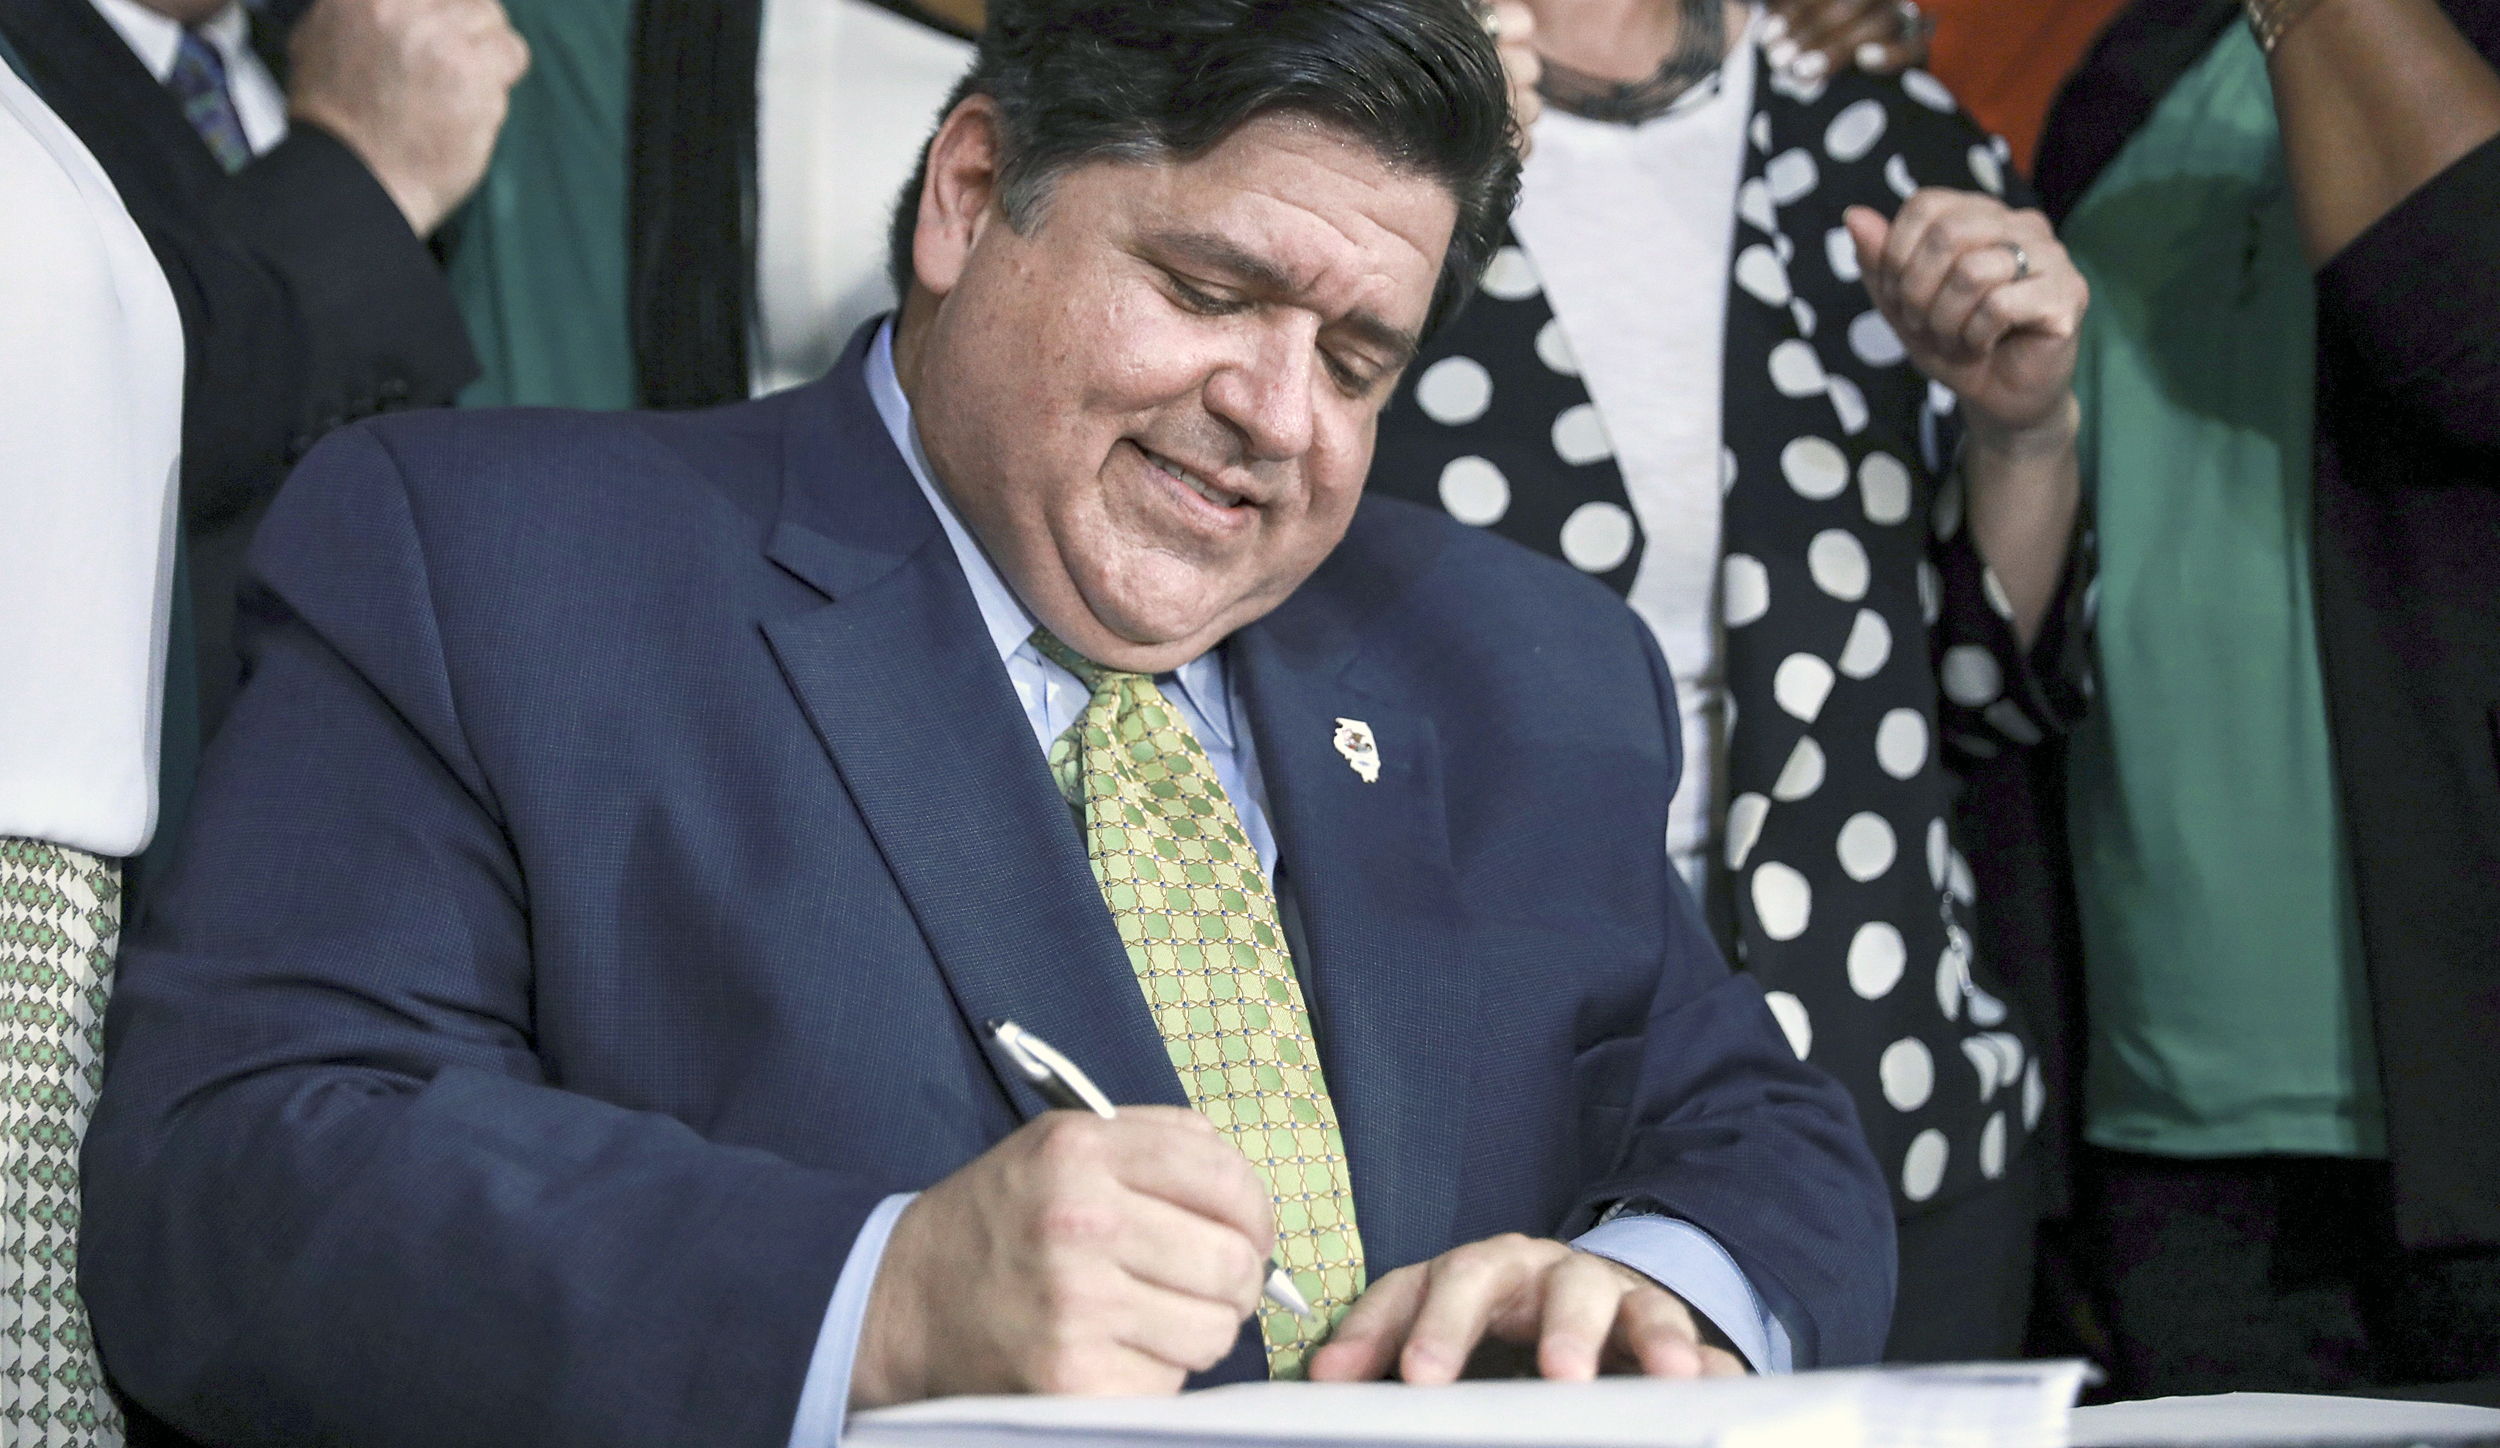 Governor Pritzker signs bill to legalize marijuana in Illinois